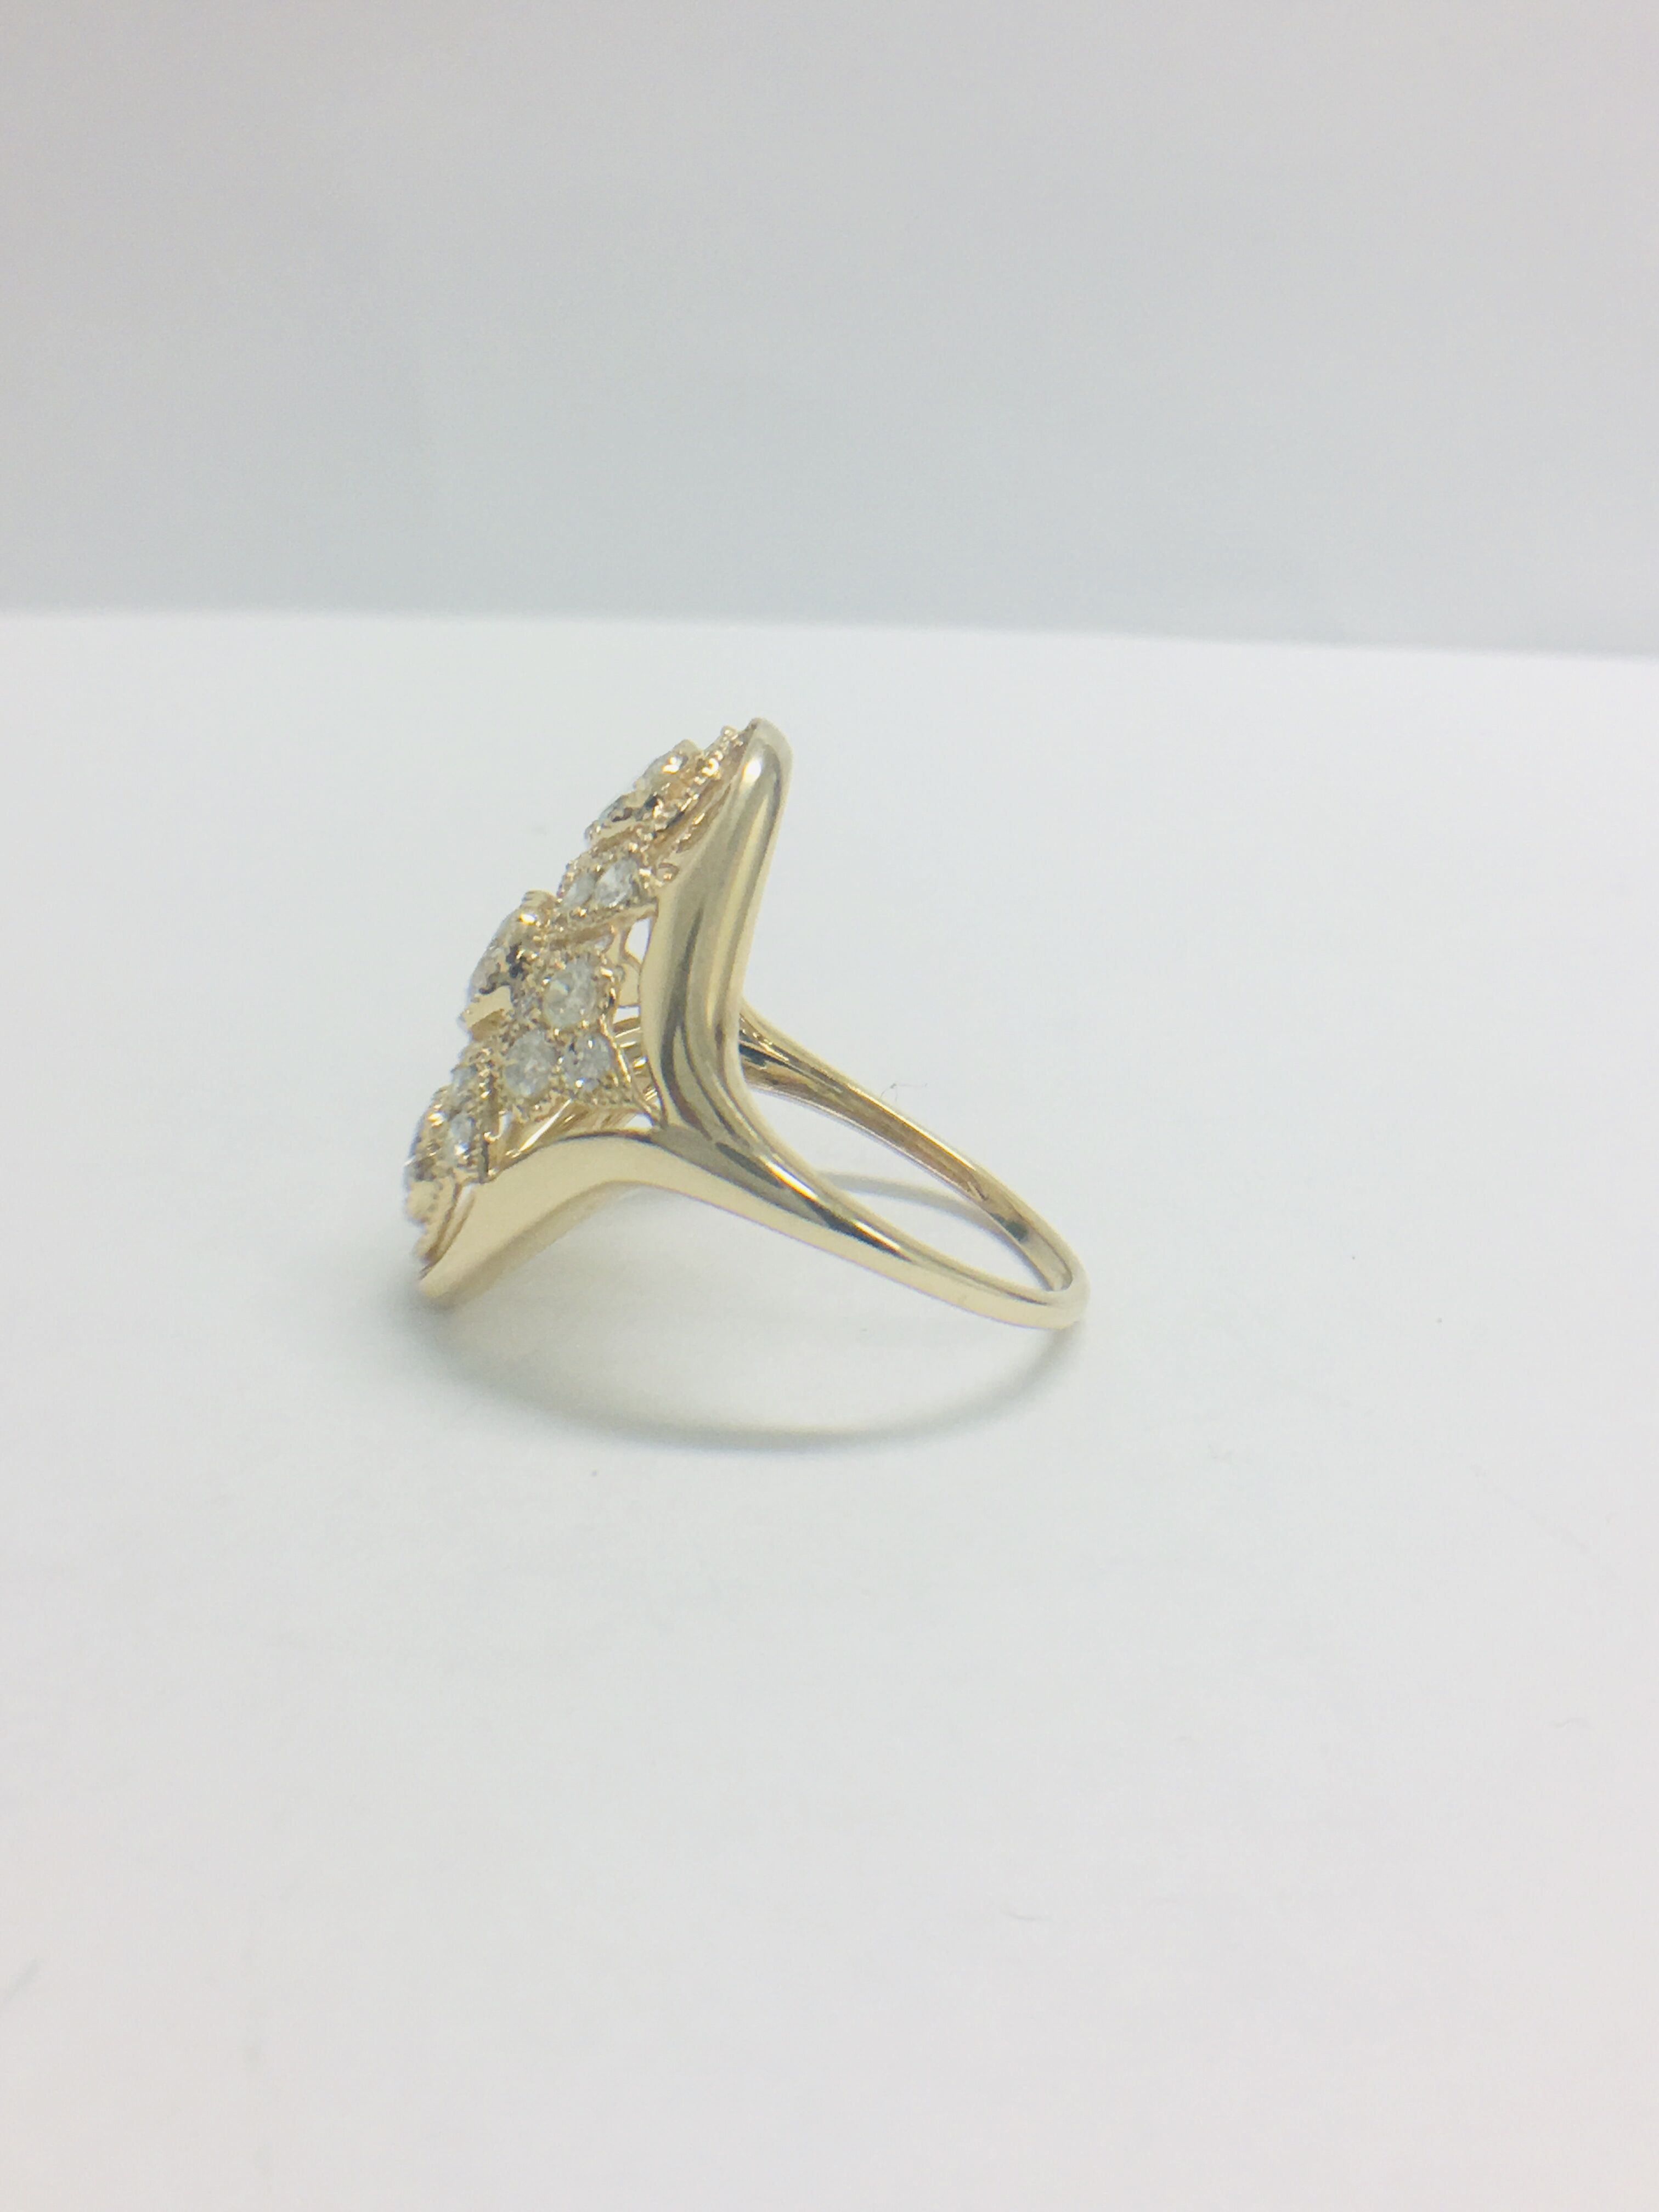 14ct Yellow Gold Diamond Ring - Image 2 of 10